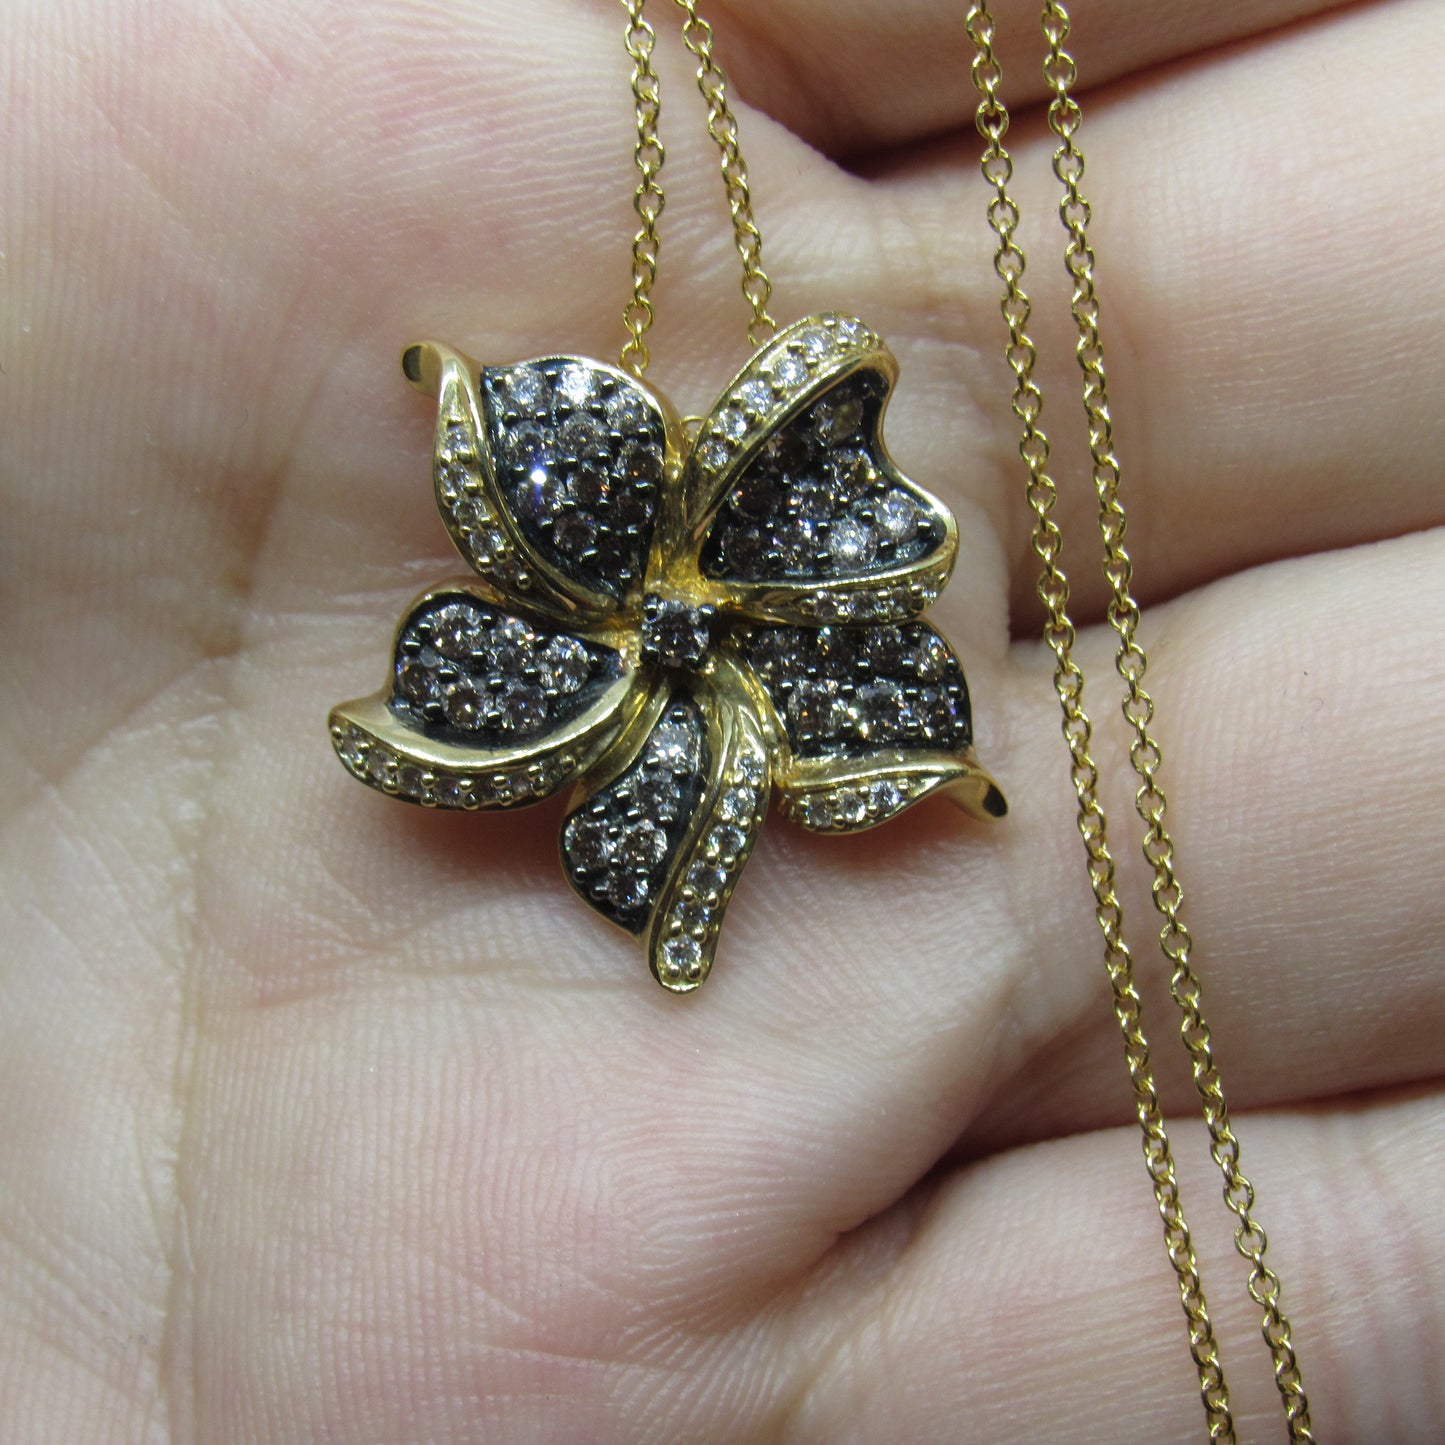 LeVian 14k Chocolate & White Diamond Flower Pendant Necklace - 18 in